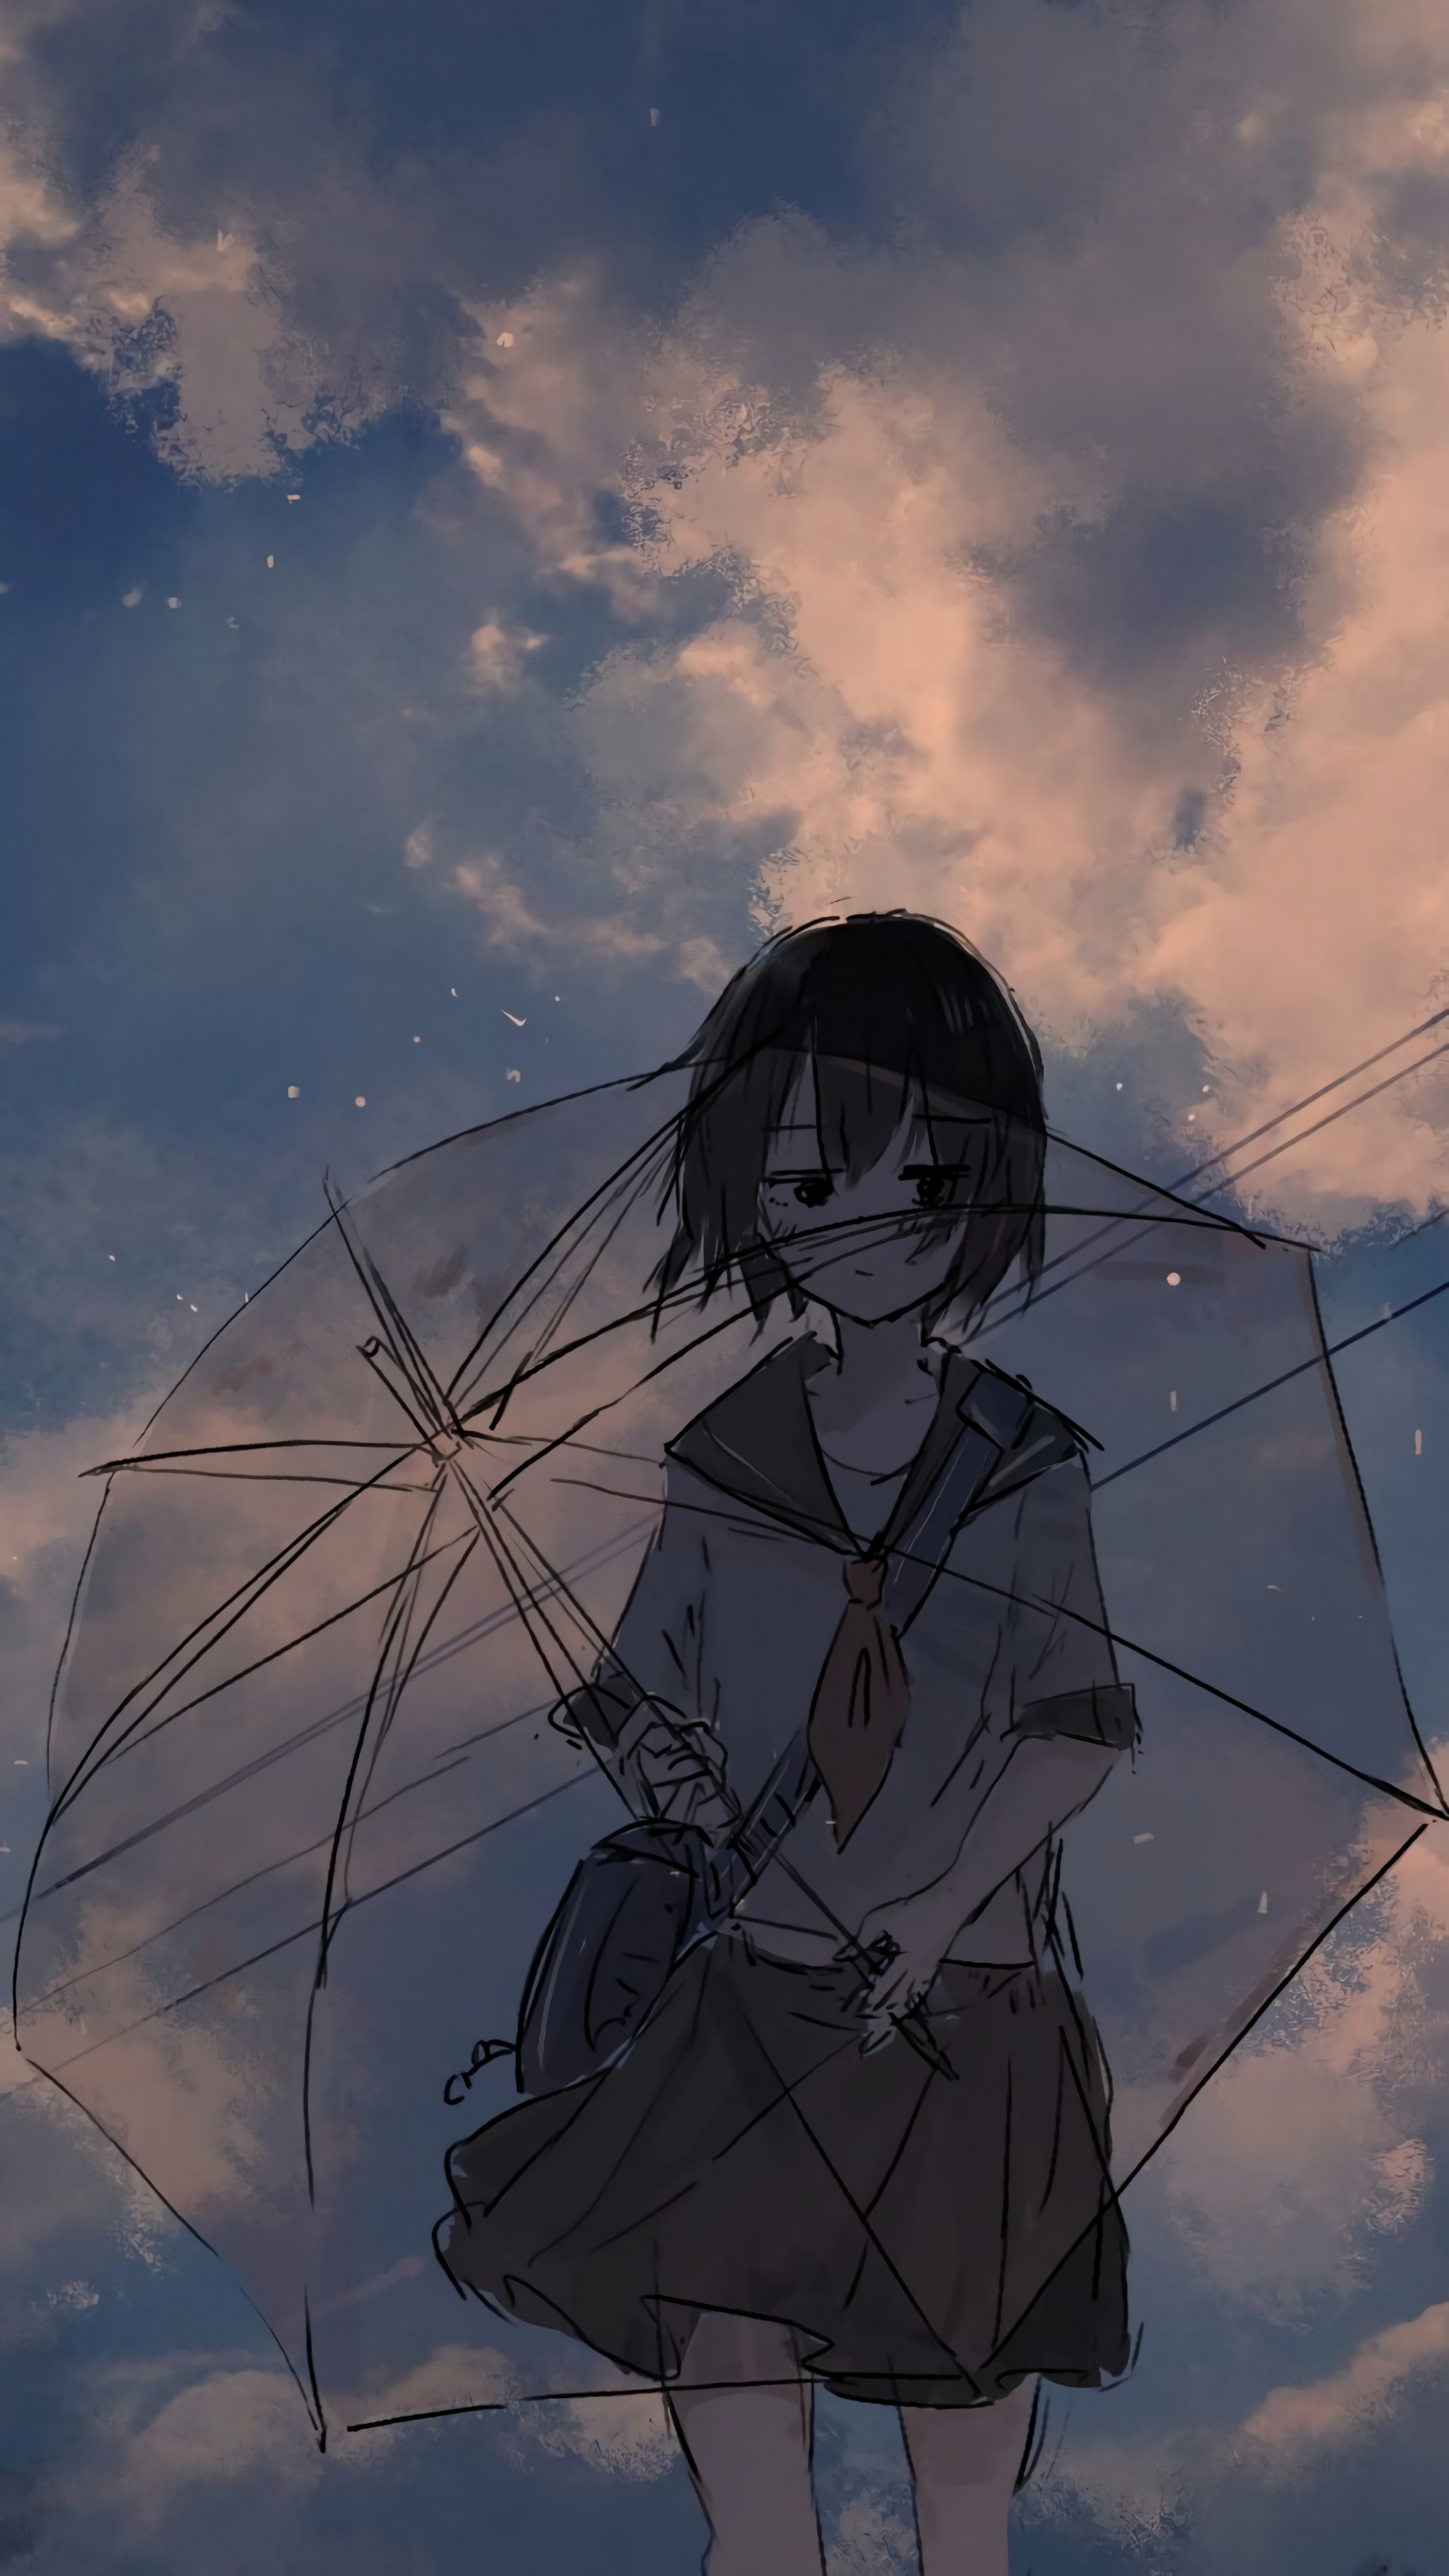 Download Wallpaper 2160x3840 Anime Girl And Umbrella Art 2160p Sony Xperia Z5 Premium Dual 2160x3840 Hd Background 246